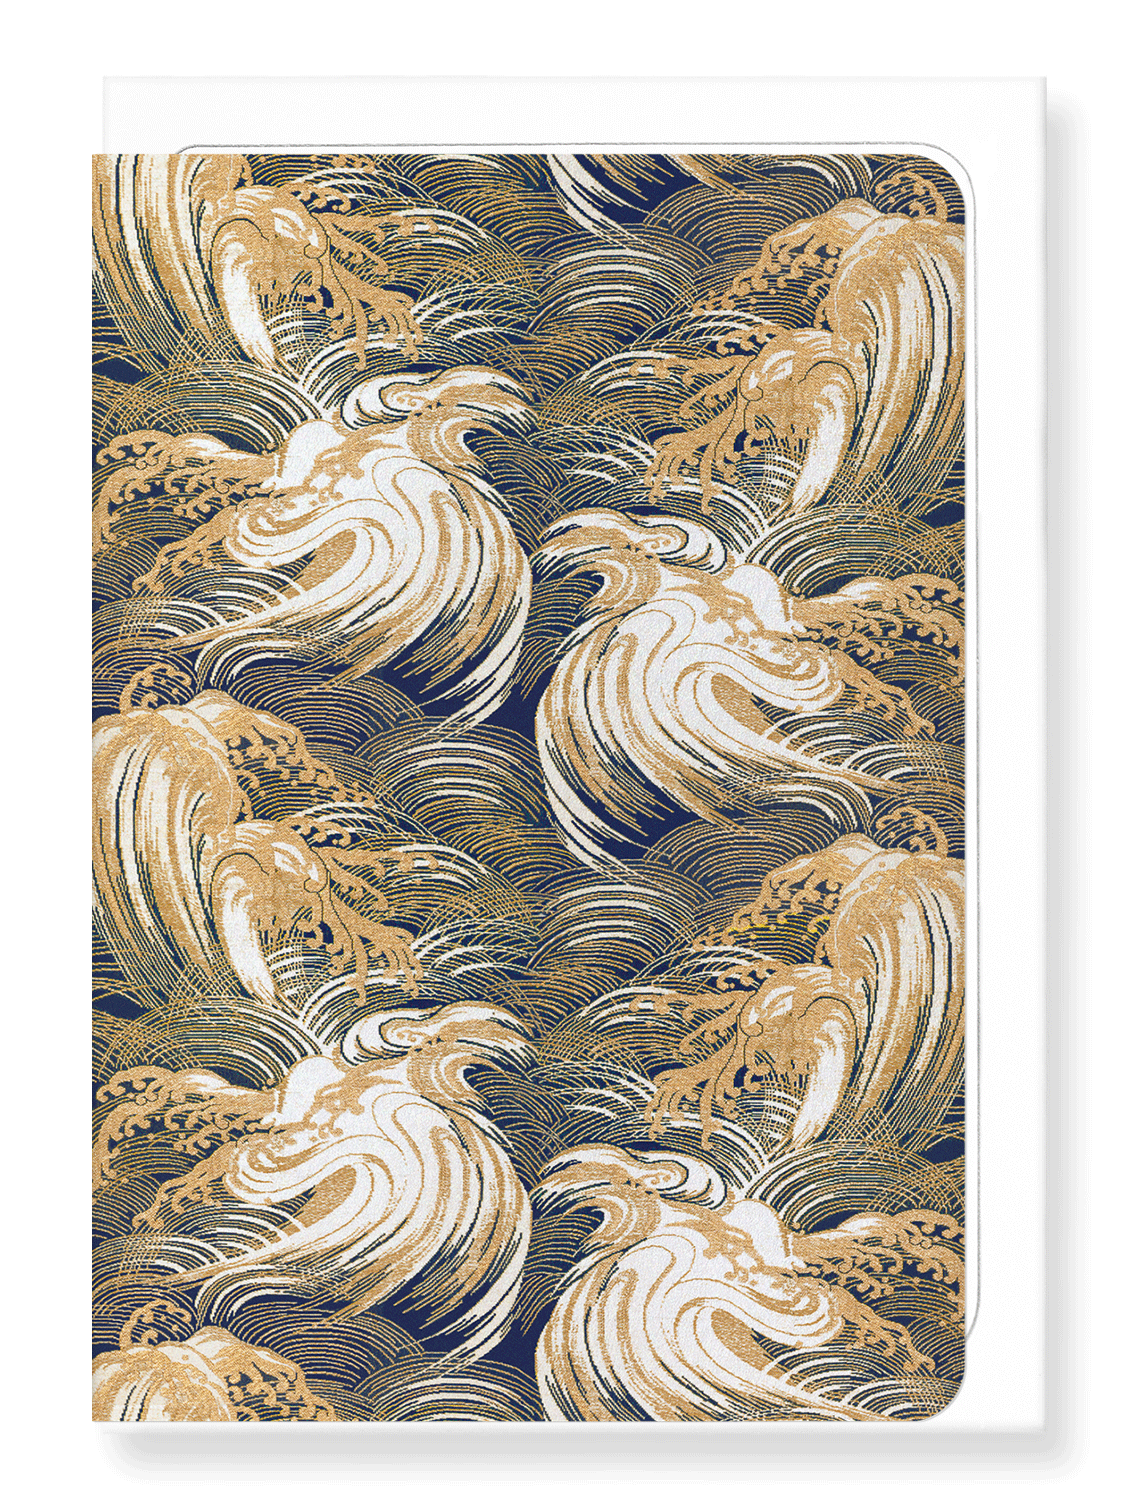 Ezen Designs - Golden pheasant in snow (c.1900) - Greeting Card - Front